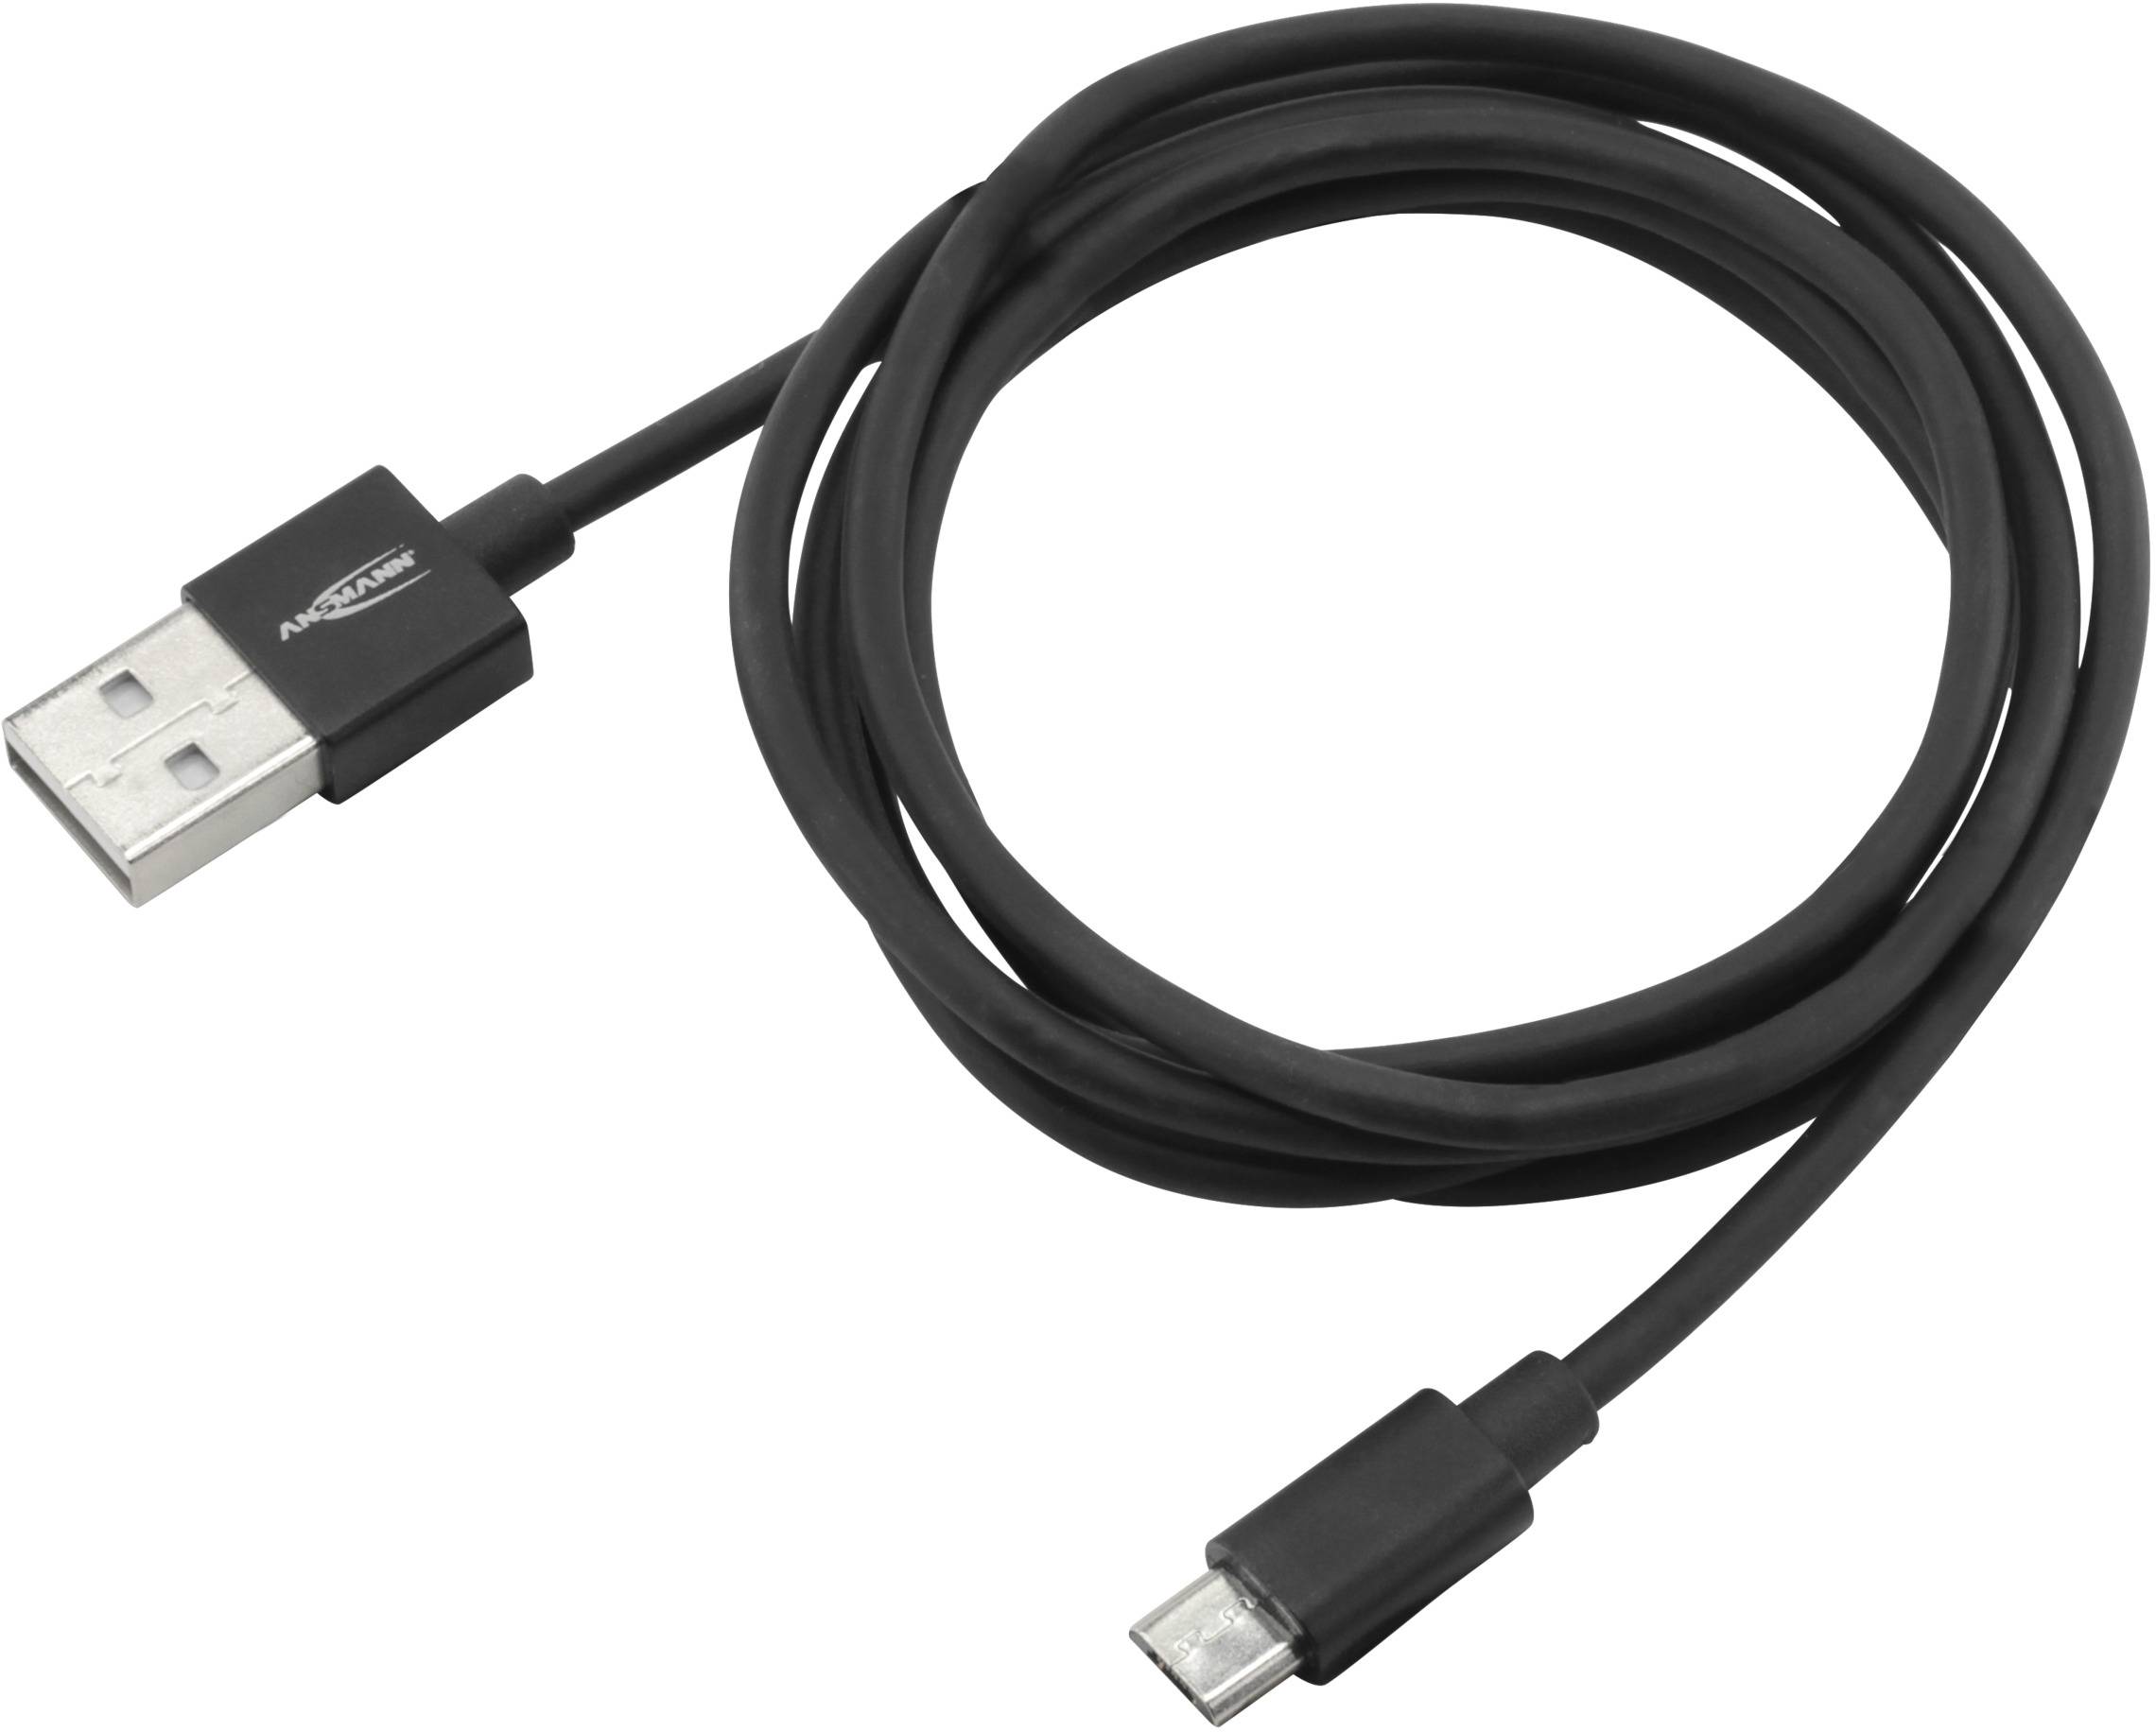 Micro USB-B 2.000 mm schwarz ANSMANN Daten & Ladekabel USB-A